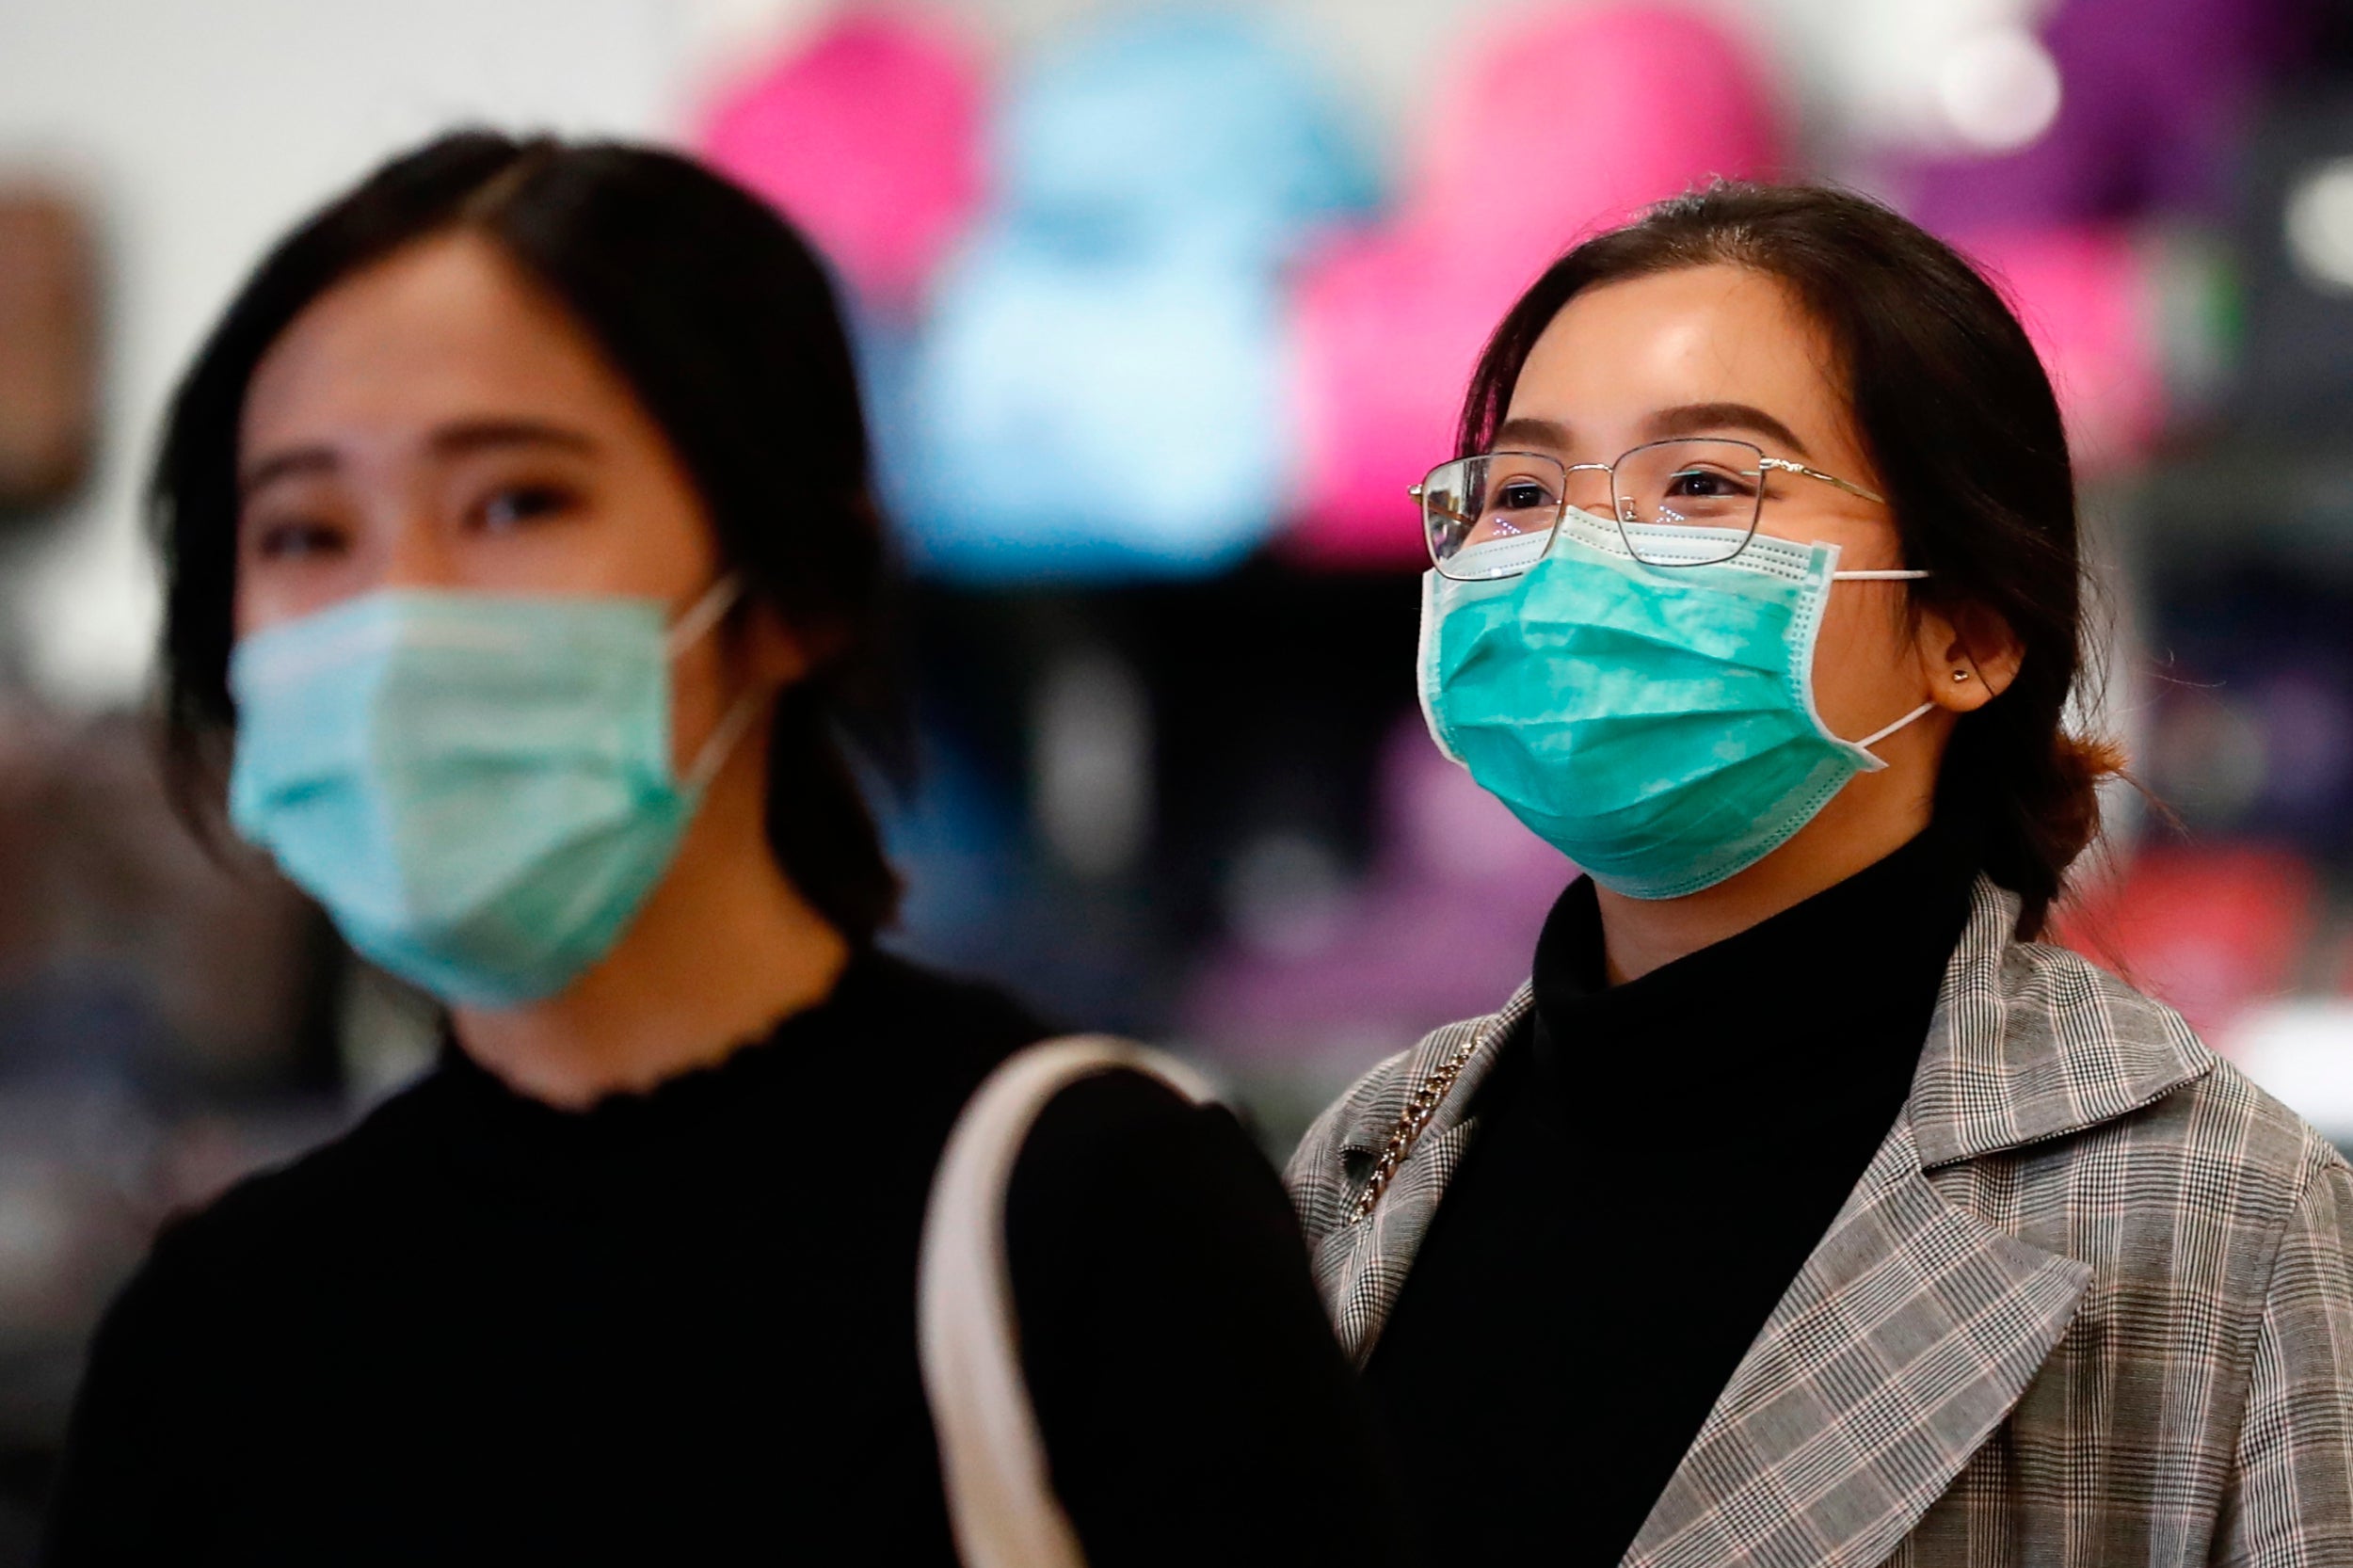 Taiwanese people wearing masks as a precautionary measure walk in a Taipei street